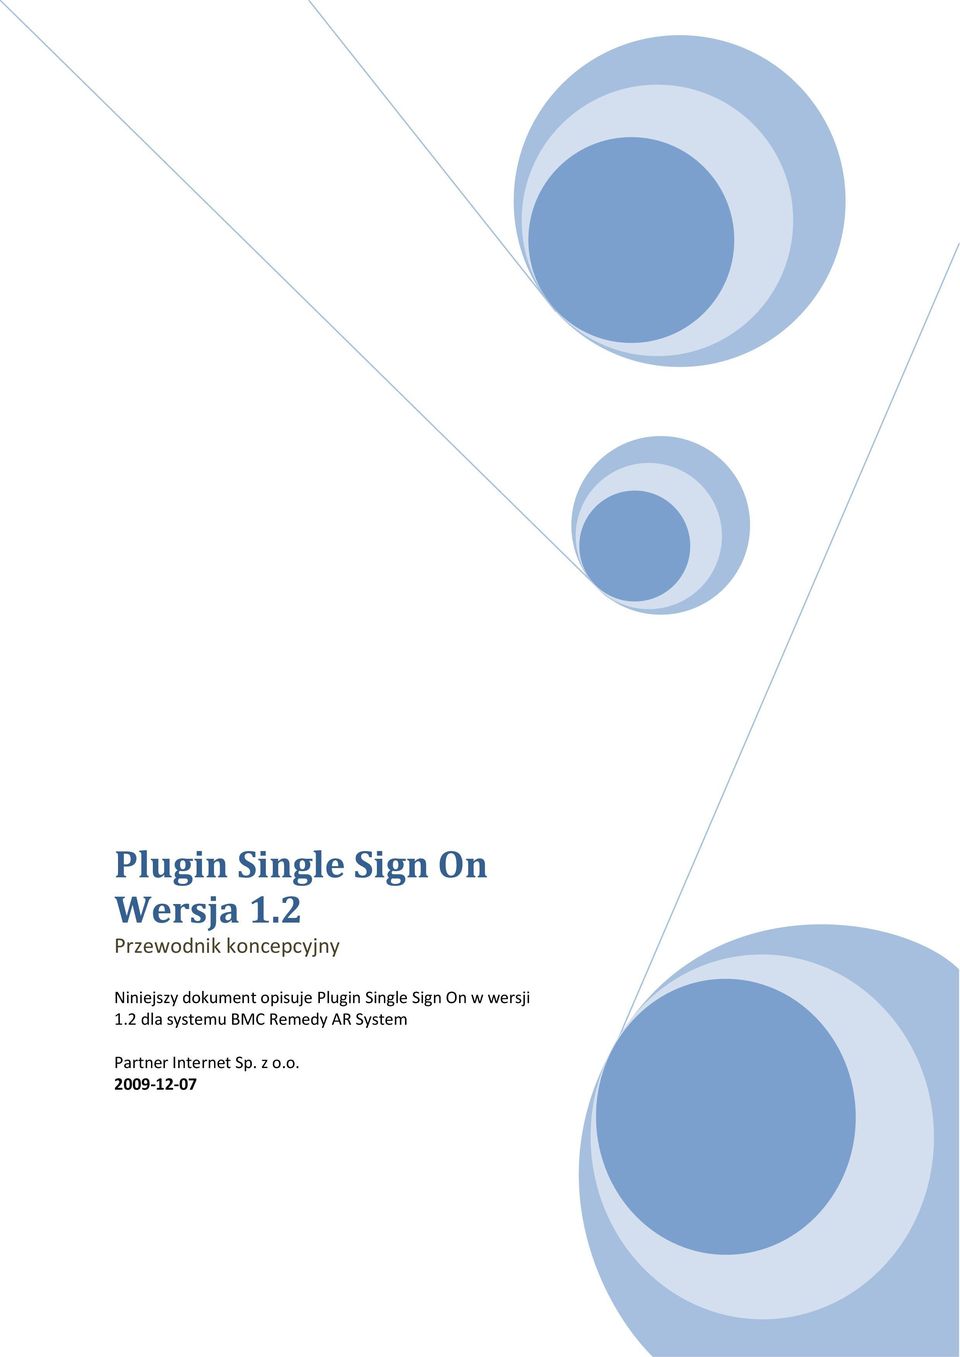 opisuje Plugin Single Sign On w wersji 1.